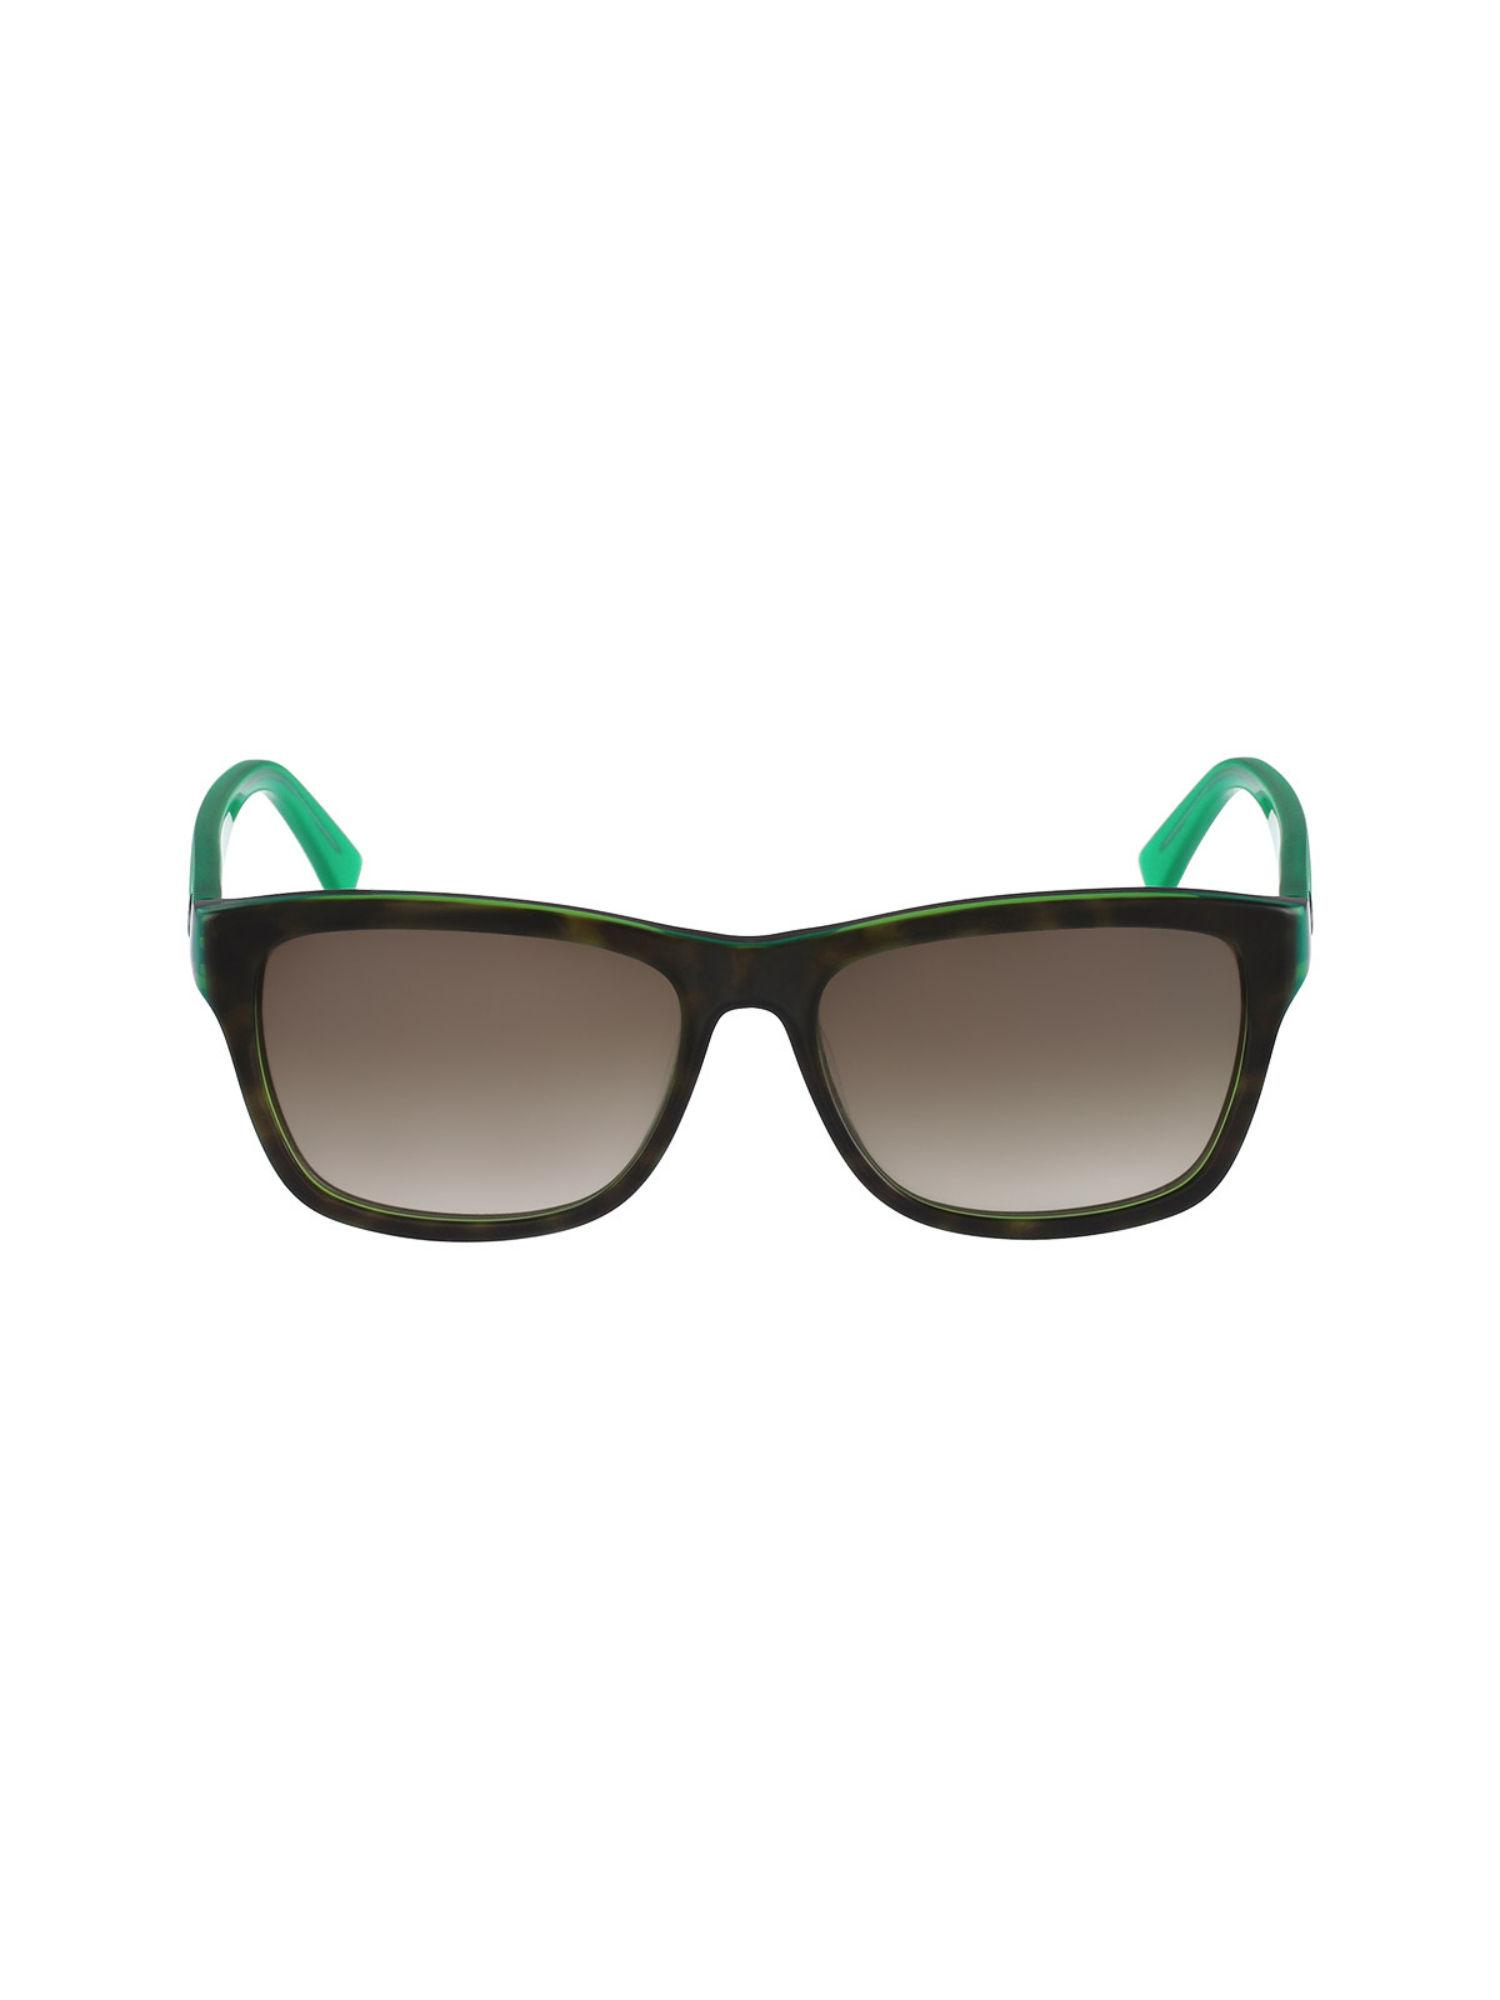 wayfarer sunglasses with brown lens for unisex